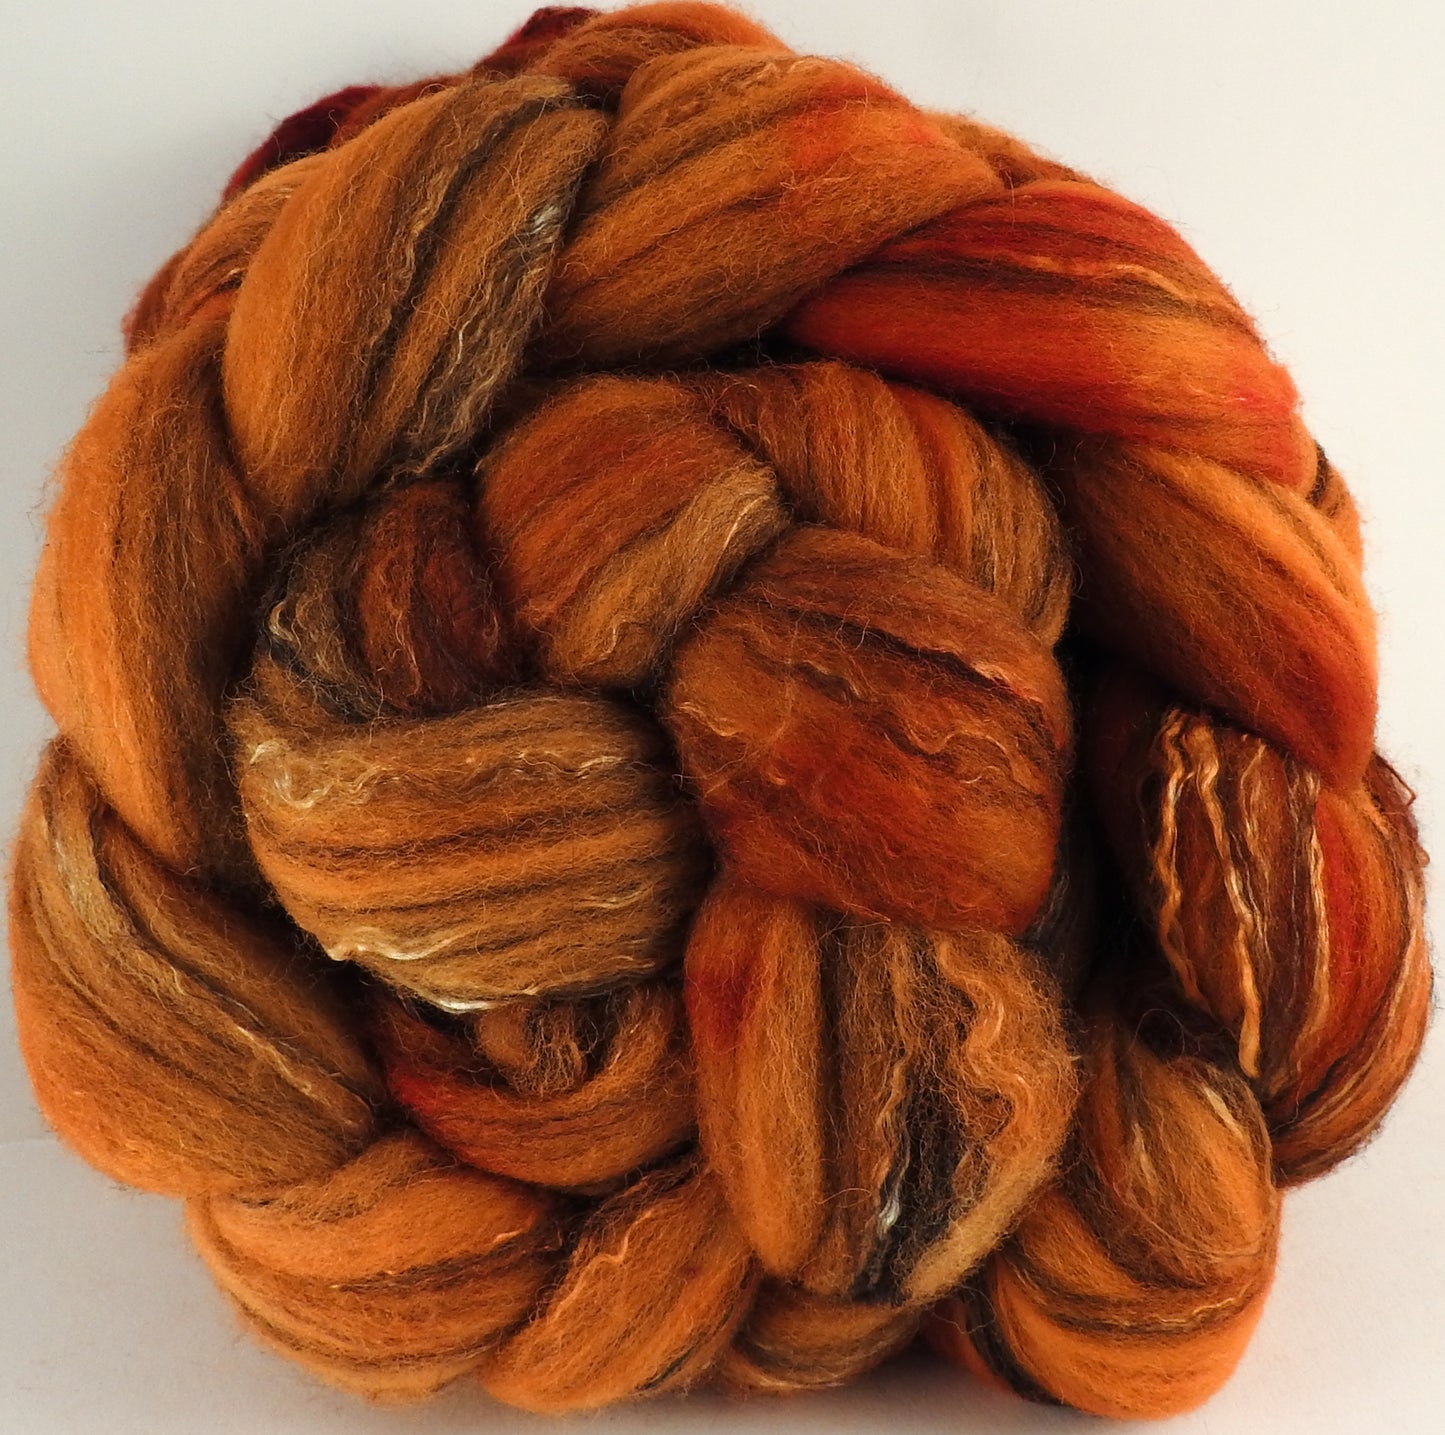 Batt in a Braid #30-  Kumquat (5.3 oz.) - Charollais/ Rambouillet / Black tussah /Mulberry silk (40/40/10/10) - Inglenook Fibers